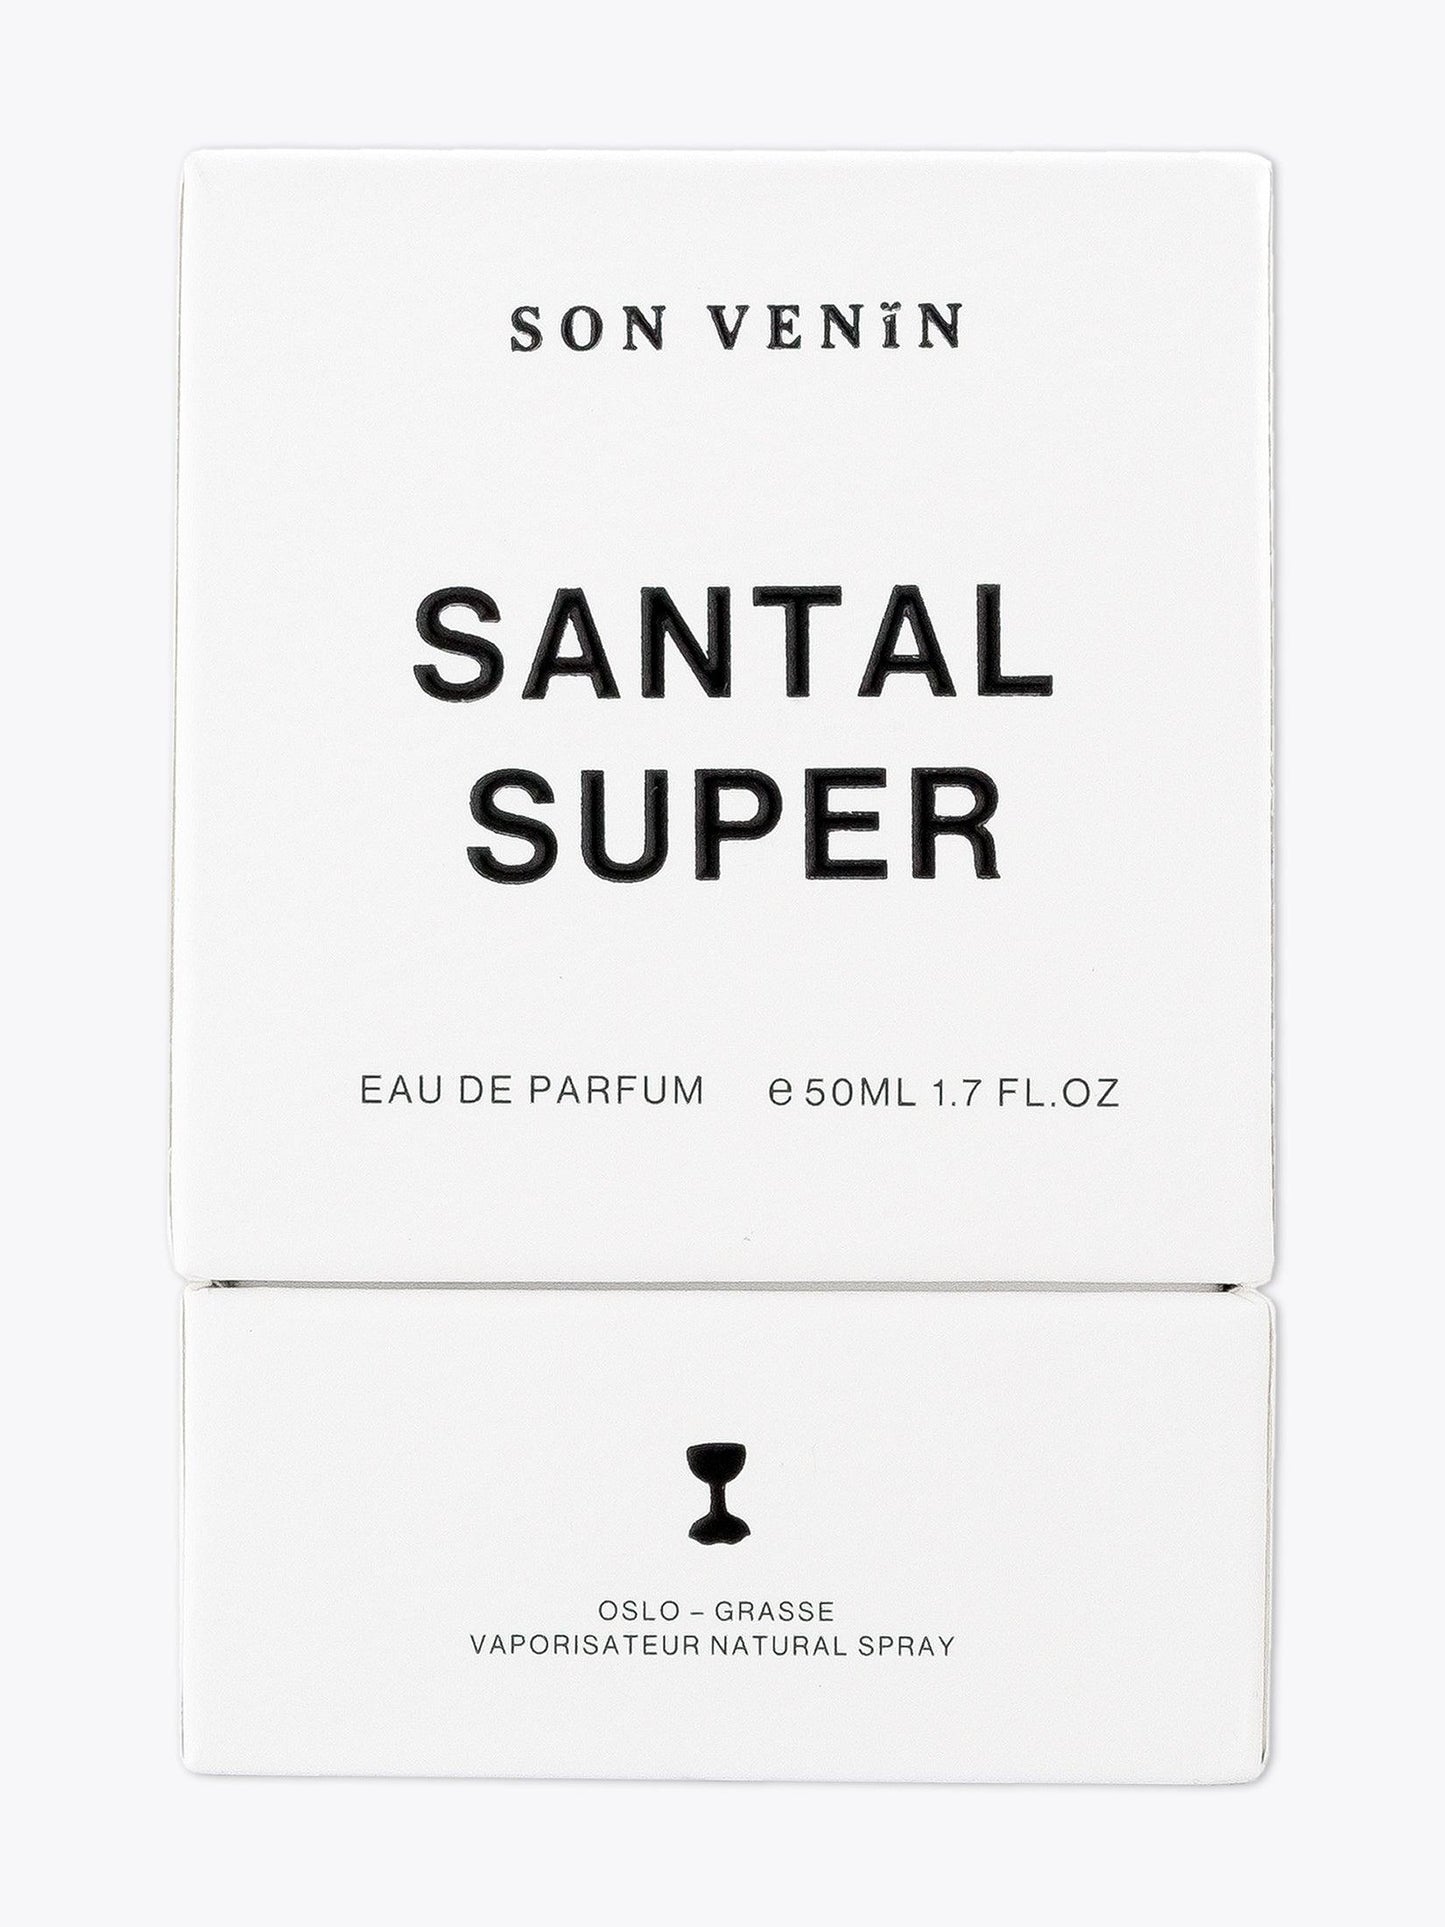 Son Venïn Santal Super Eau de Parfum 50ml - Apodep.com